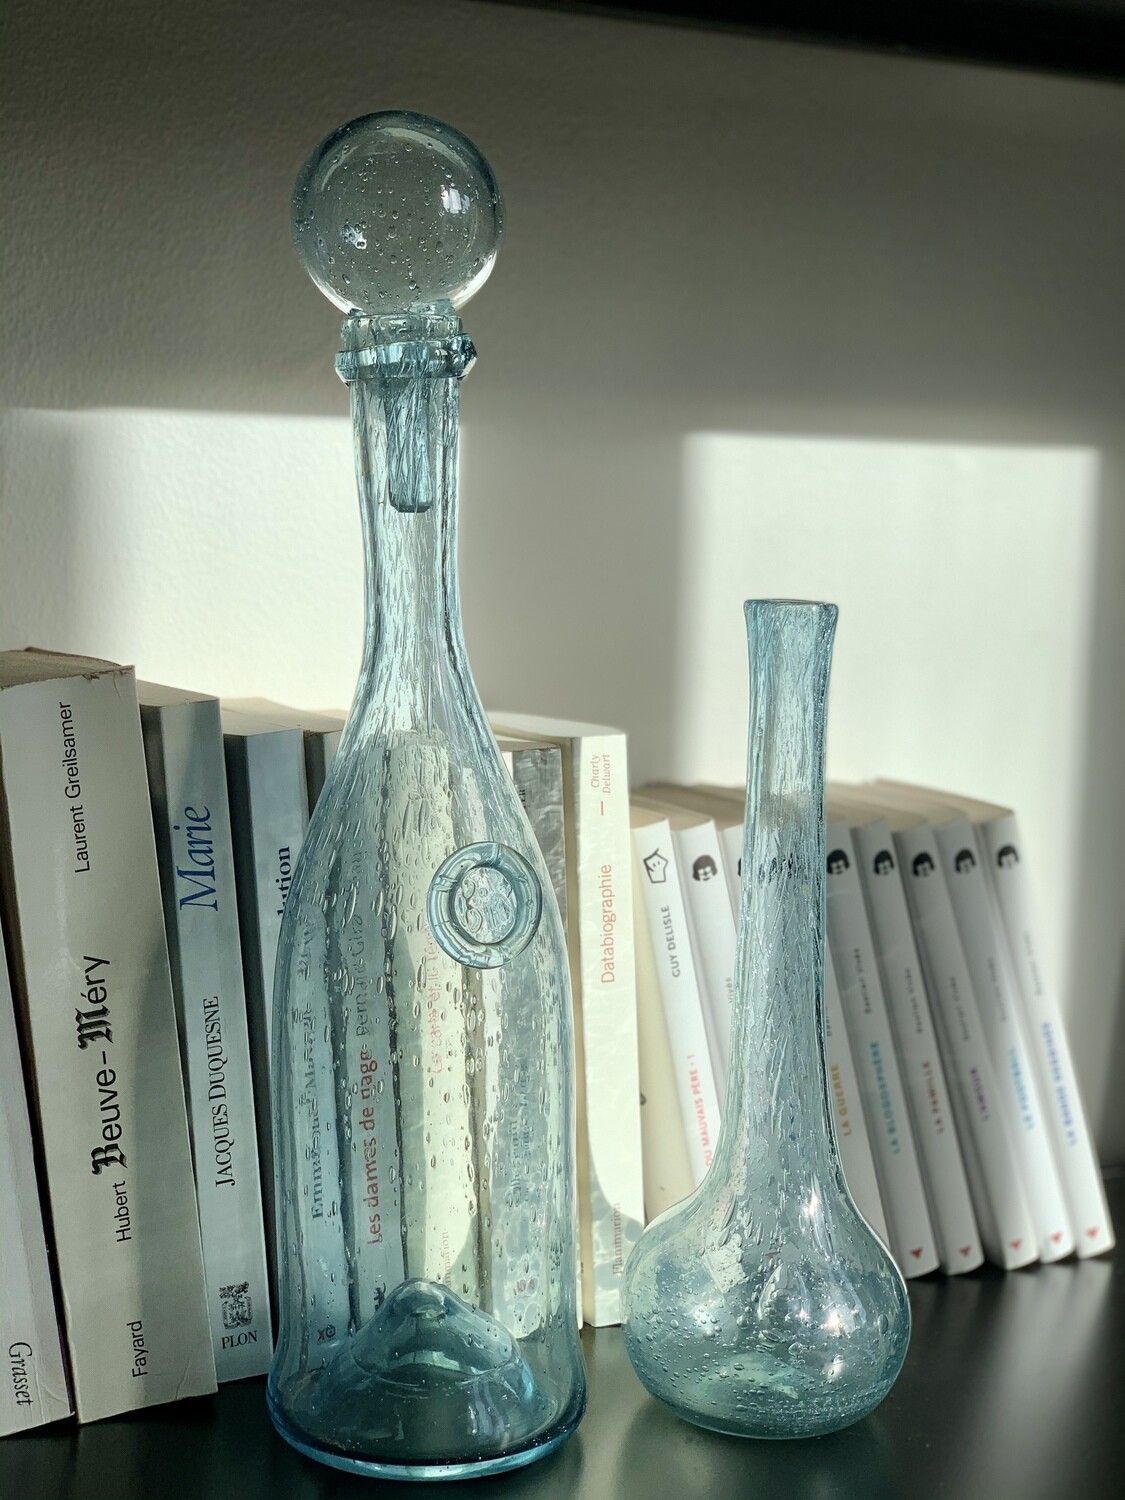 Lot 1 : Carafe Biot et vase en verre bullé bleu clair